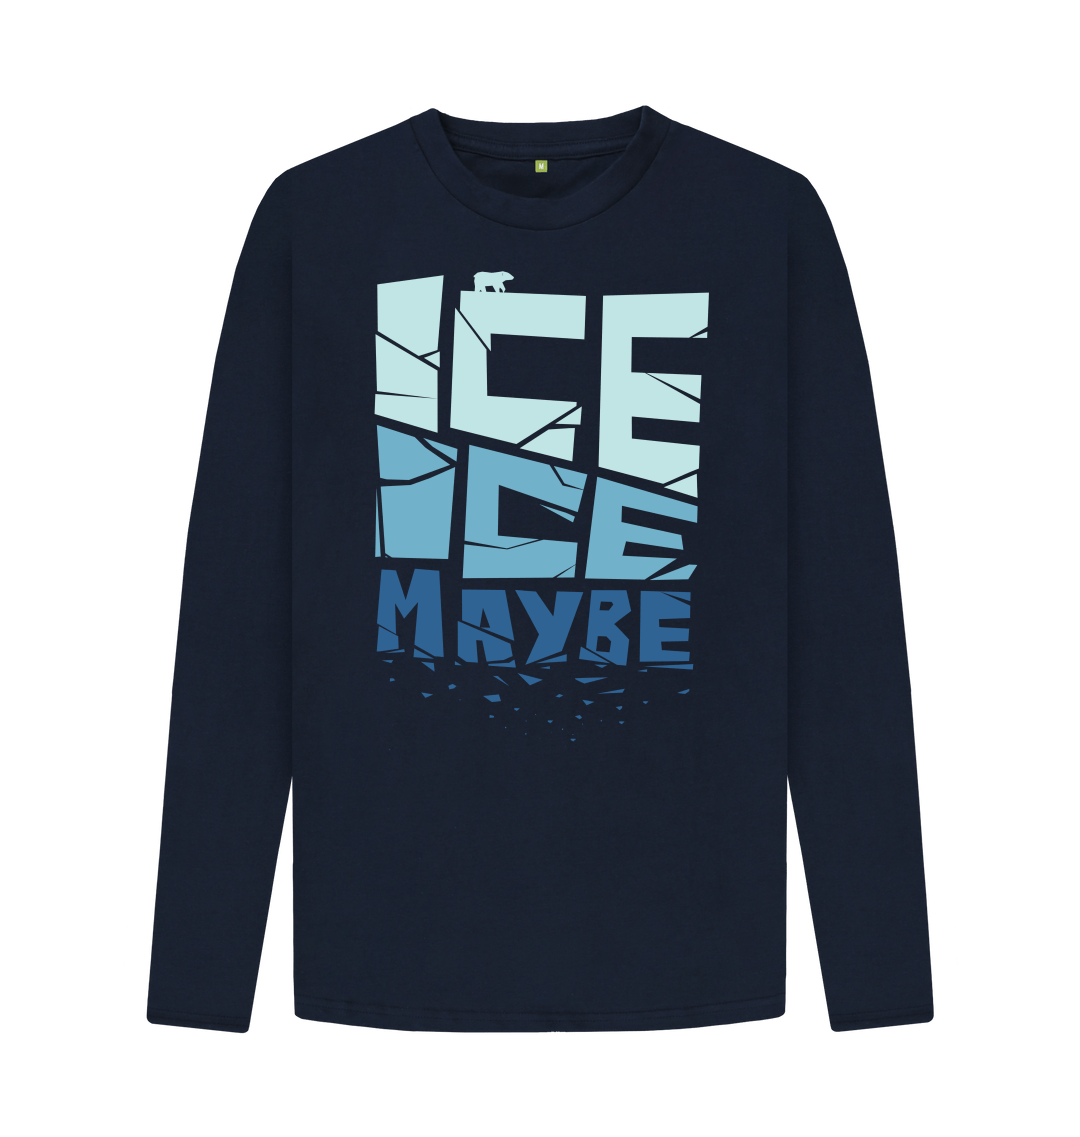 Ice Ice Maybe Long Sleeve T - shirt - Printed T - shirt